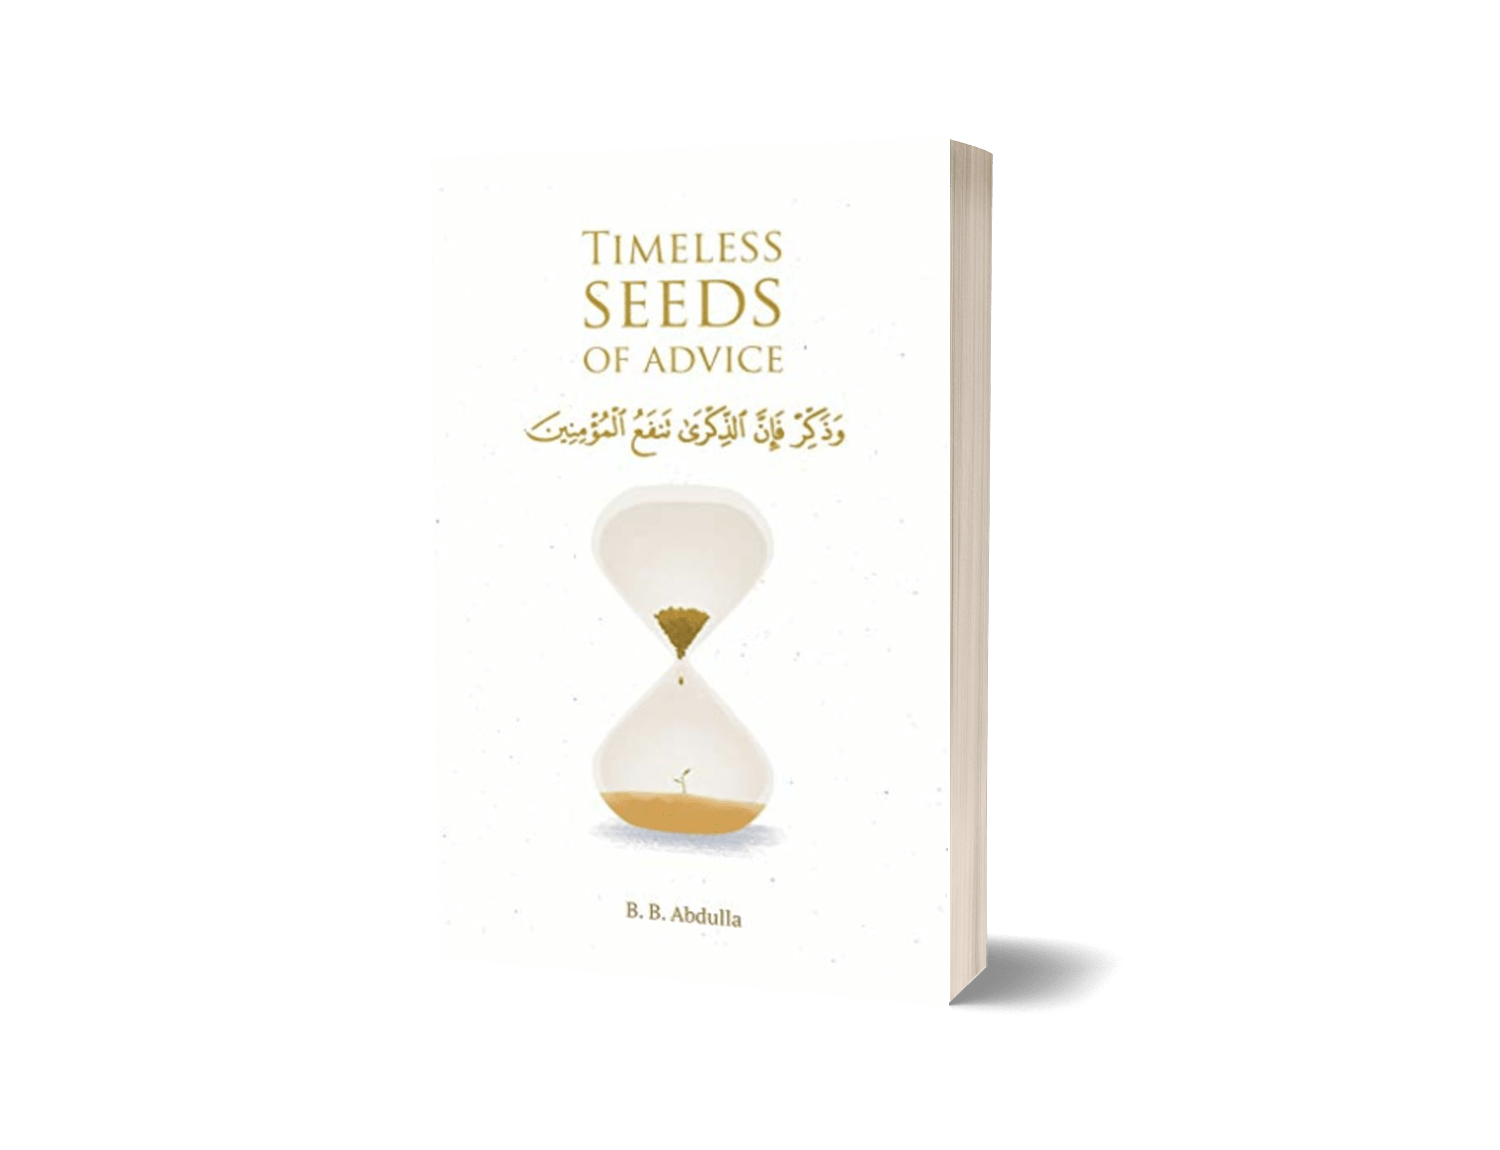 Timeless seeds of Advice by B. B. Abdulla